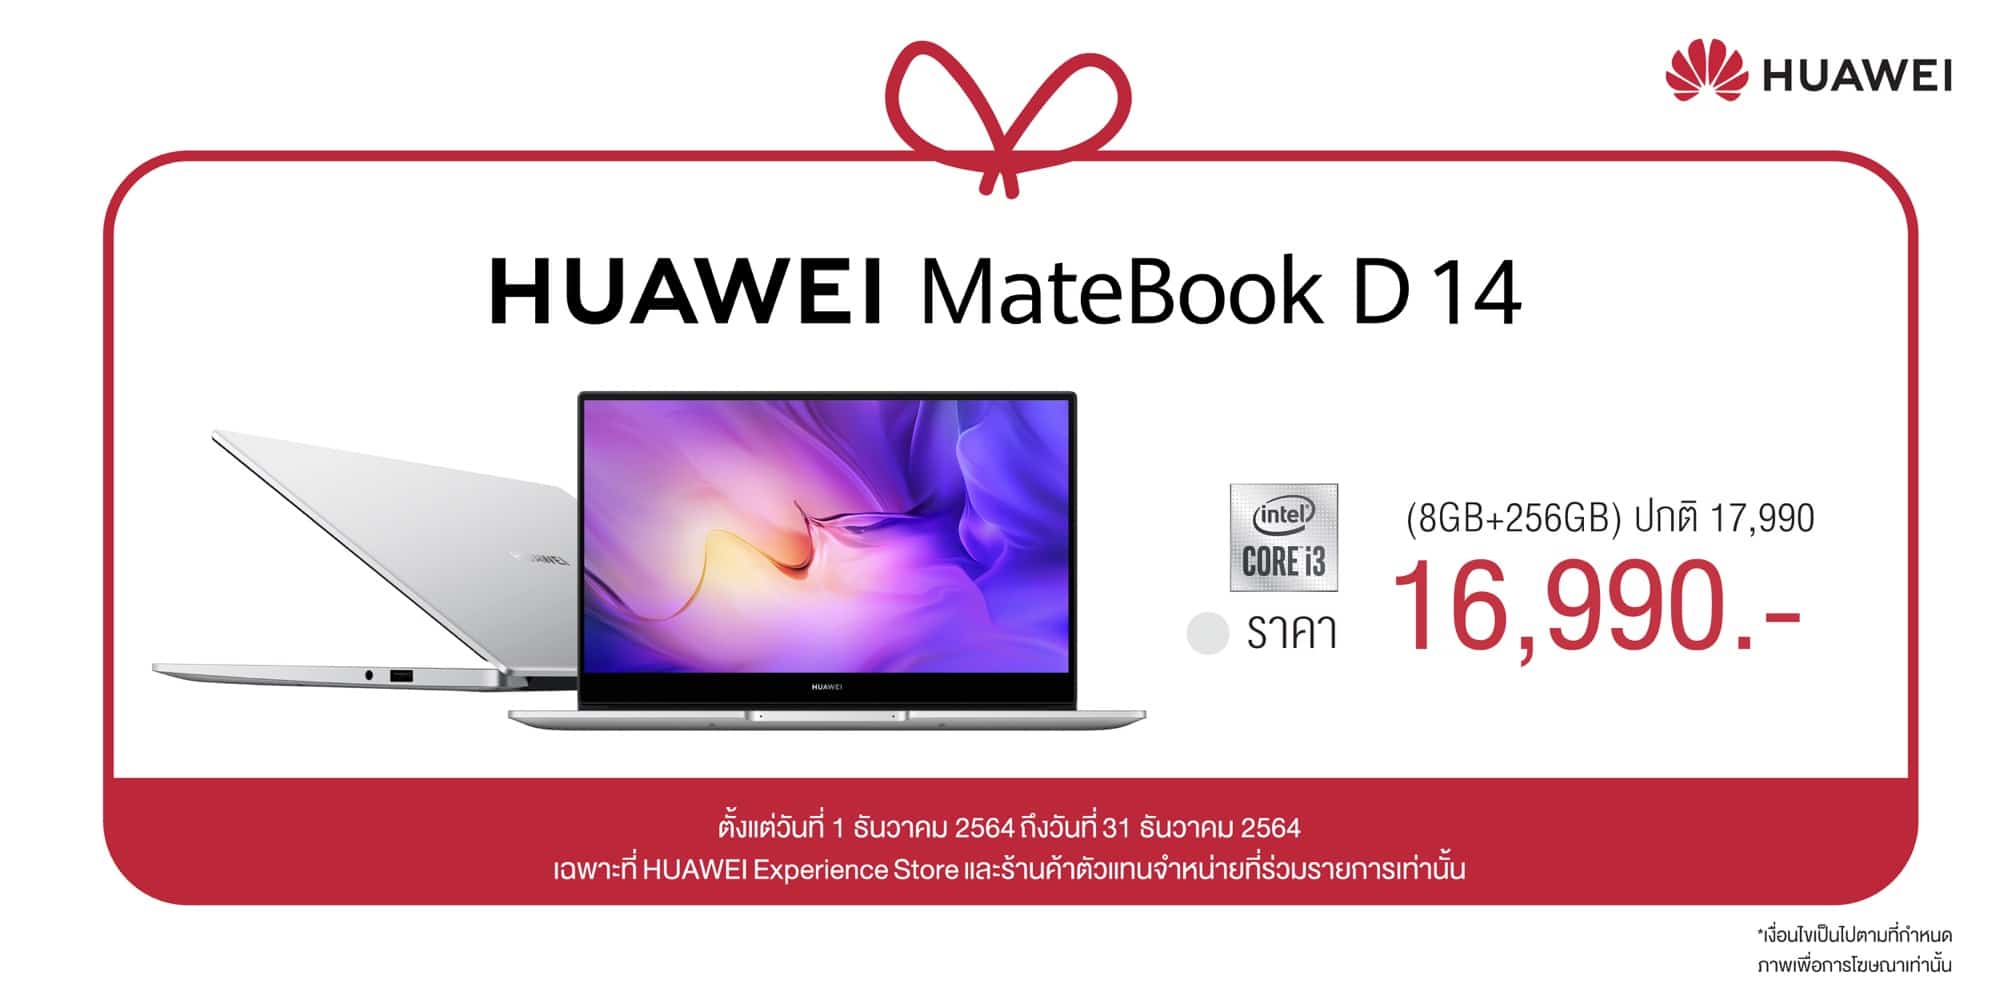 HUAWEI MateBook D Series จัดโปรราคาดี เริ่มต้น 15,990 บาท 7